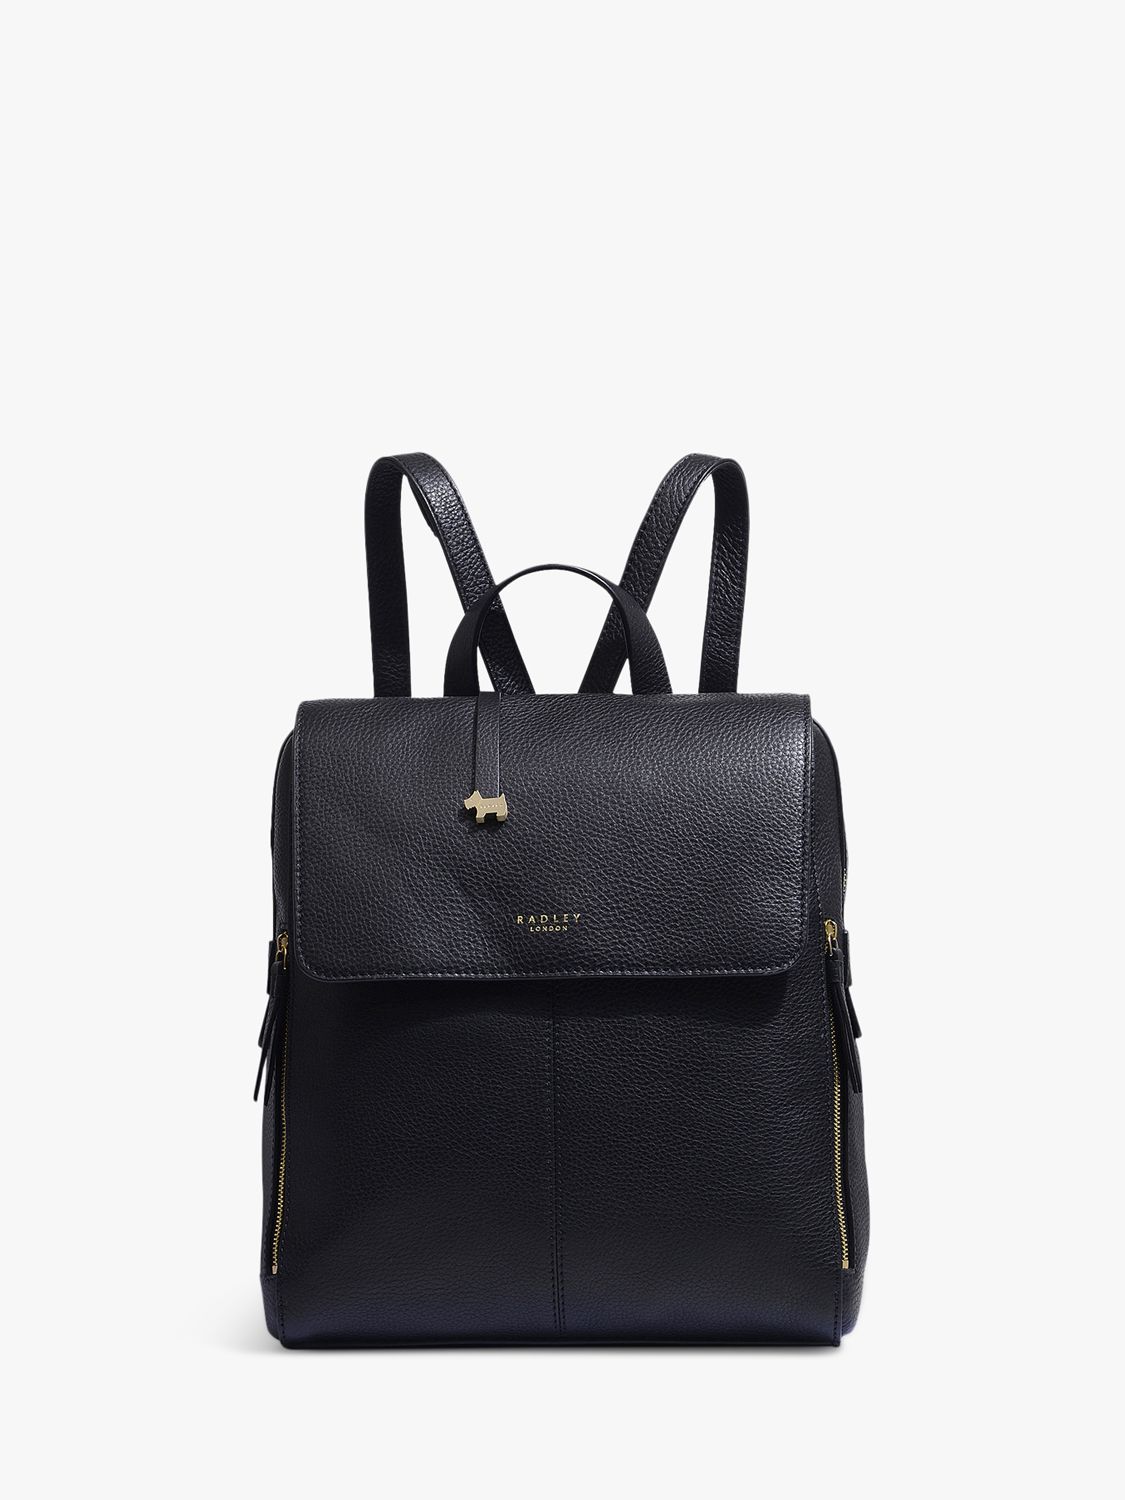 Radley Lorne Close Large Leather Backpack, Black at John Lewis & Partners